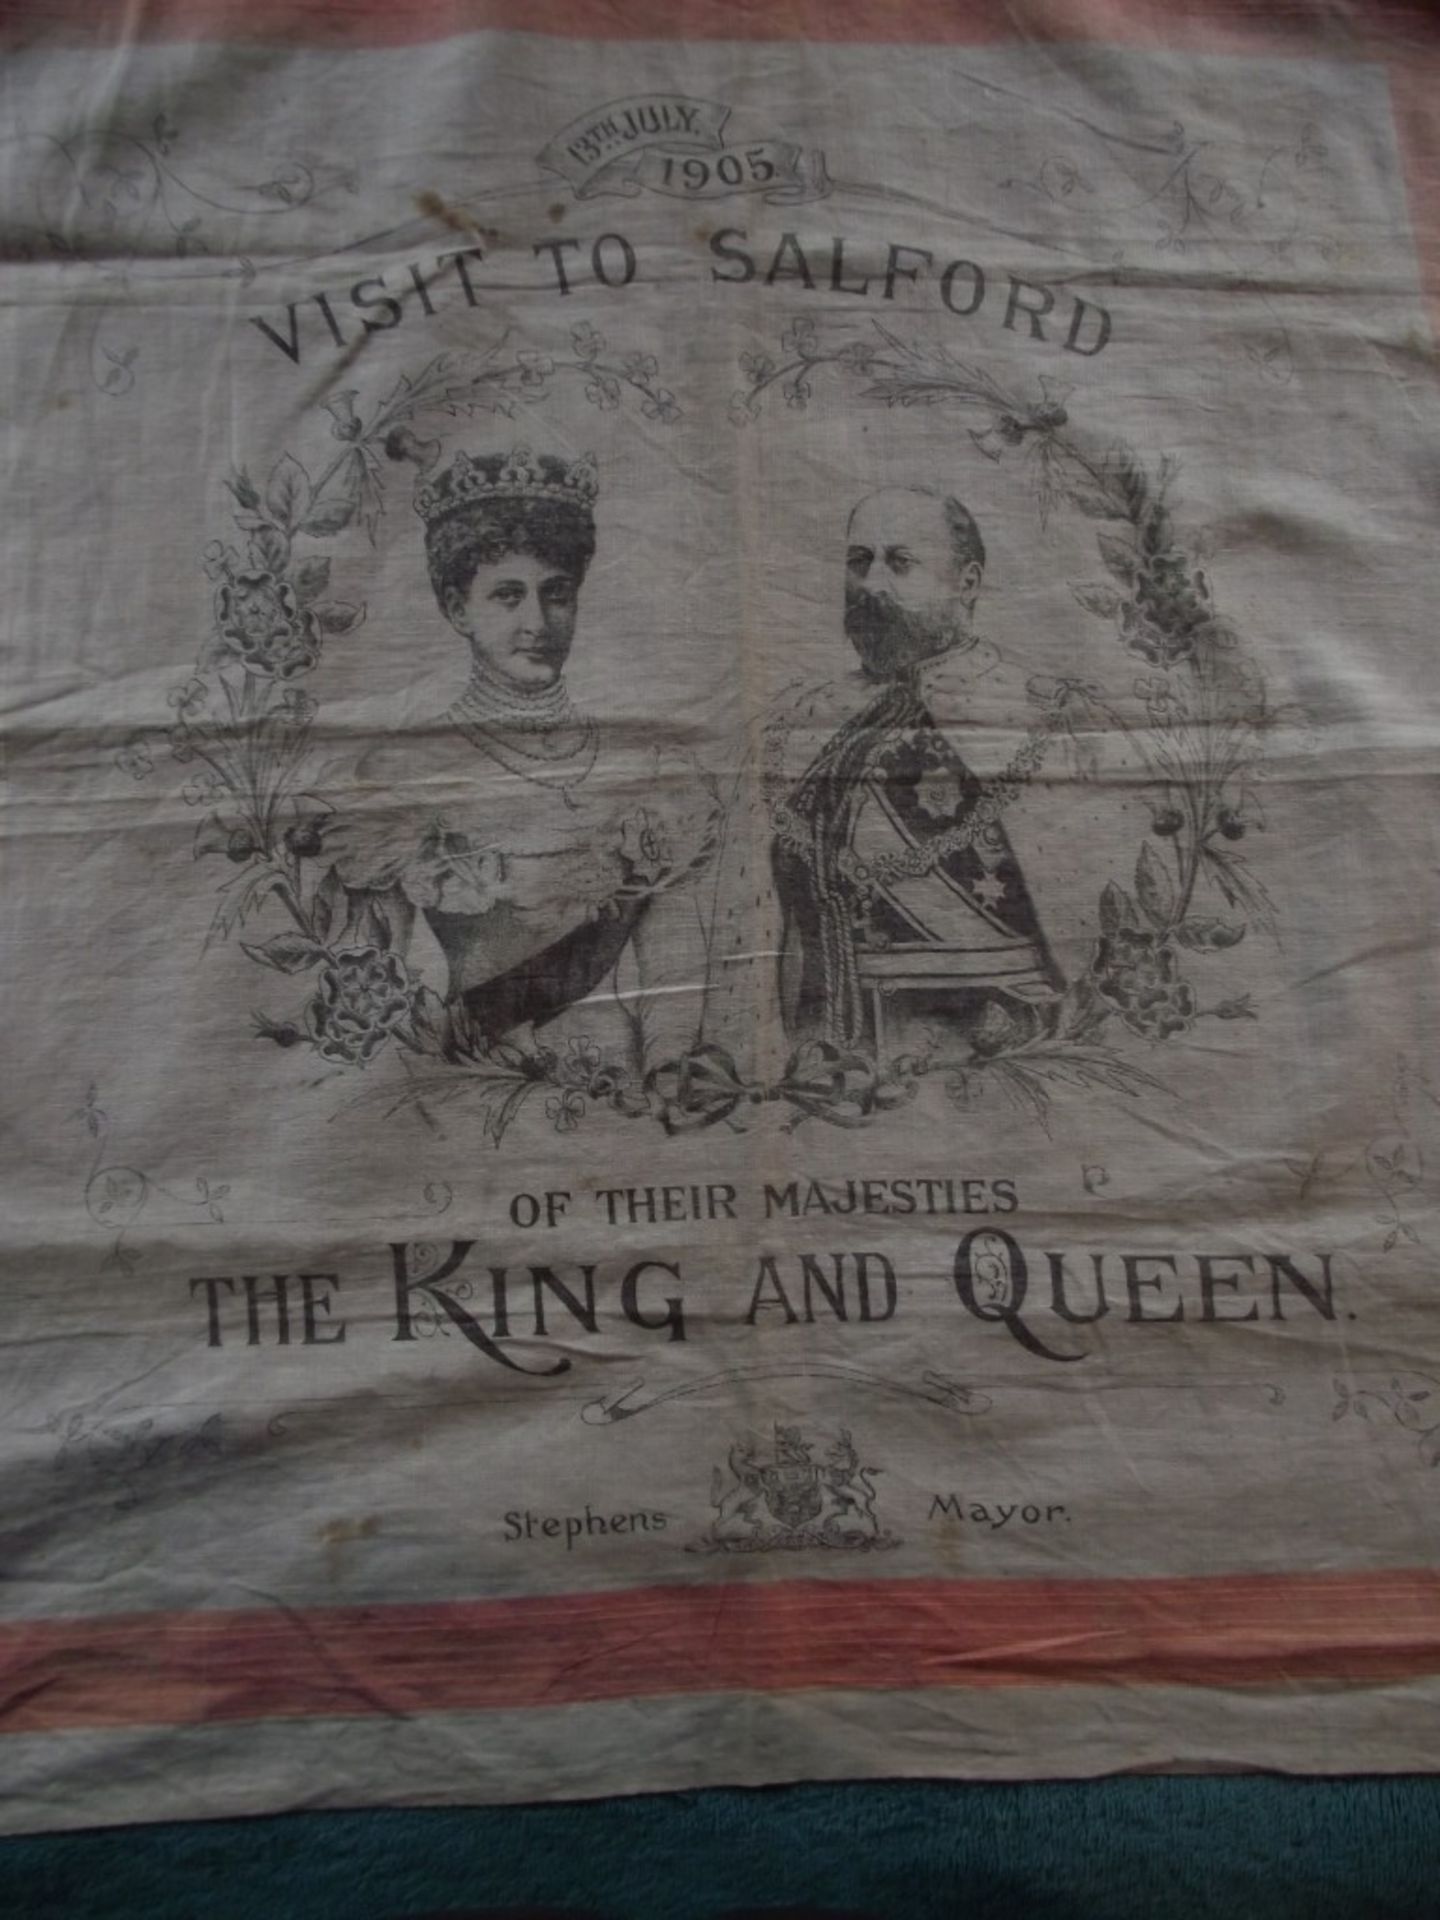 Commemorative Handkerchief - Royal Visit To Salford July 13th 1905 - Image 12 of 12